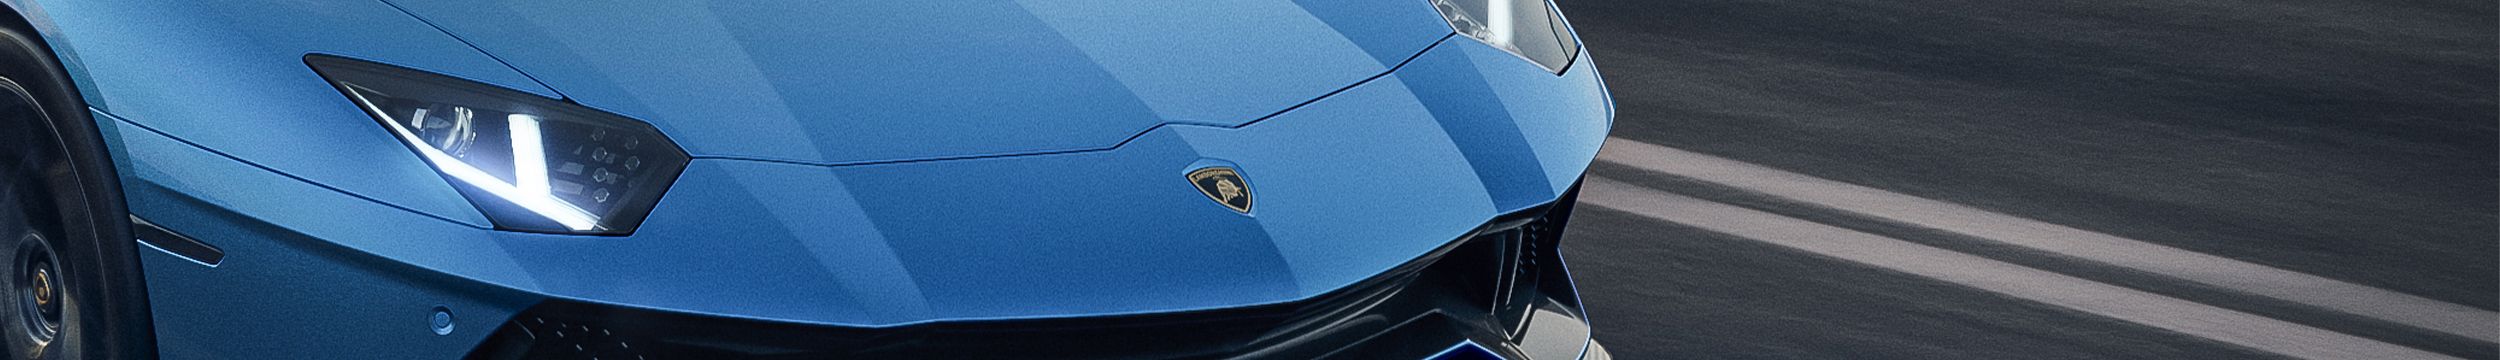 Lamborghini page header image